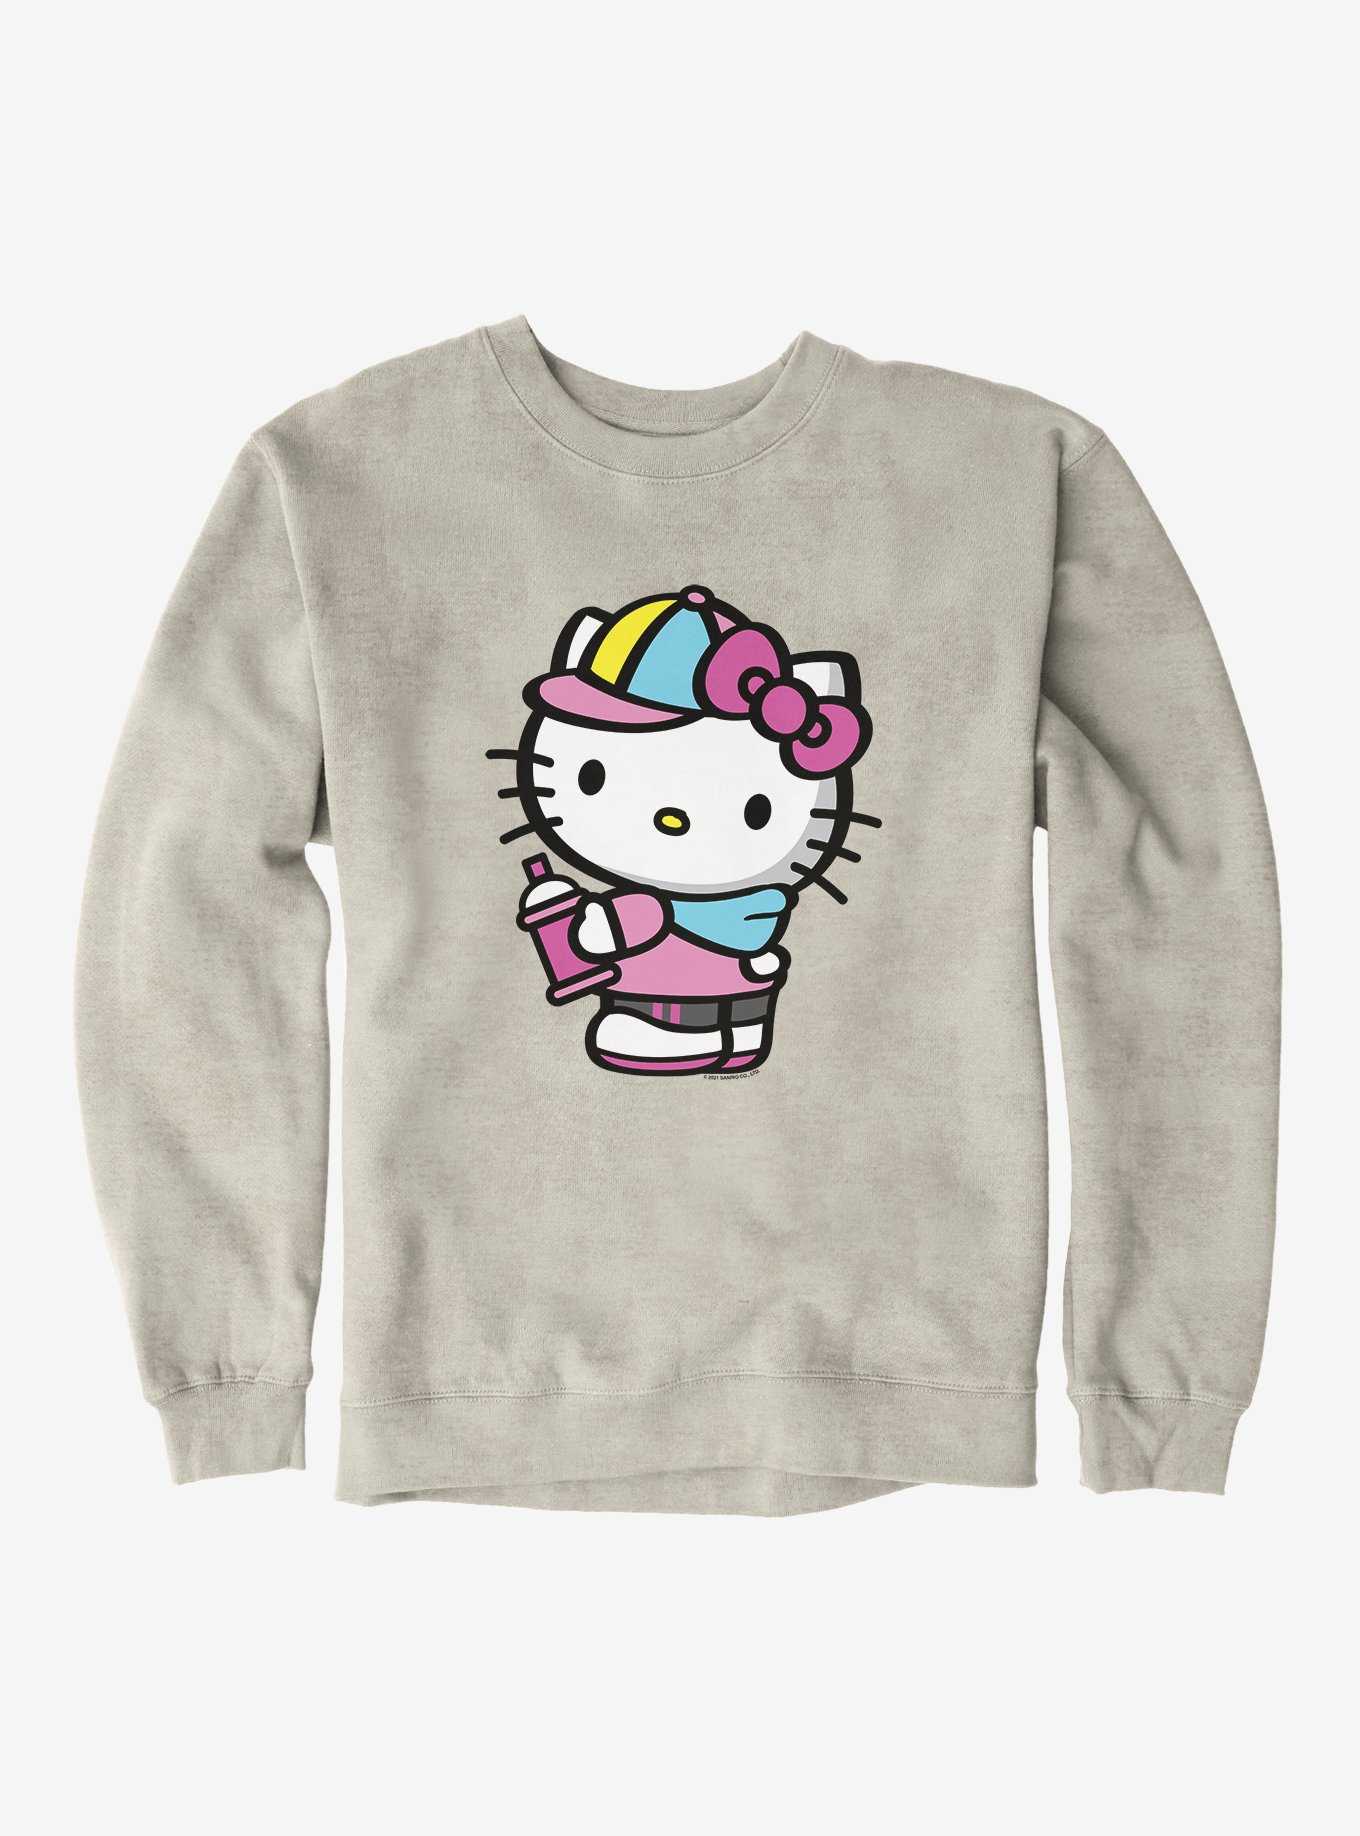 Hello Kitty Spray Can Side  Sweatshirt, , hi-res